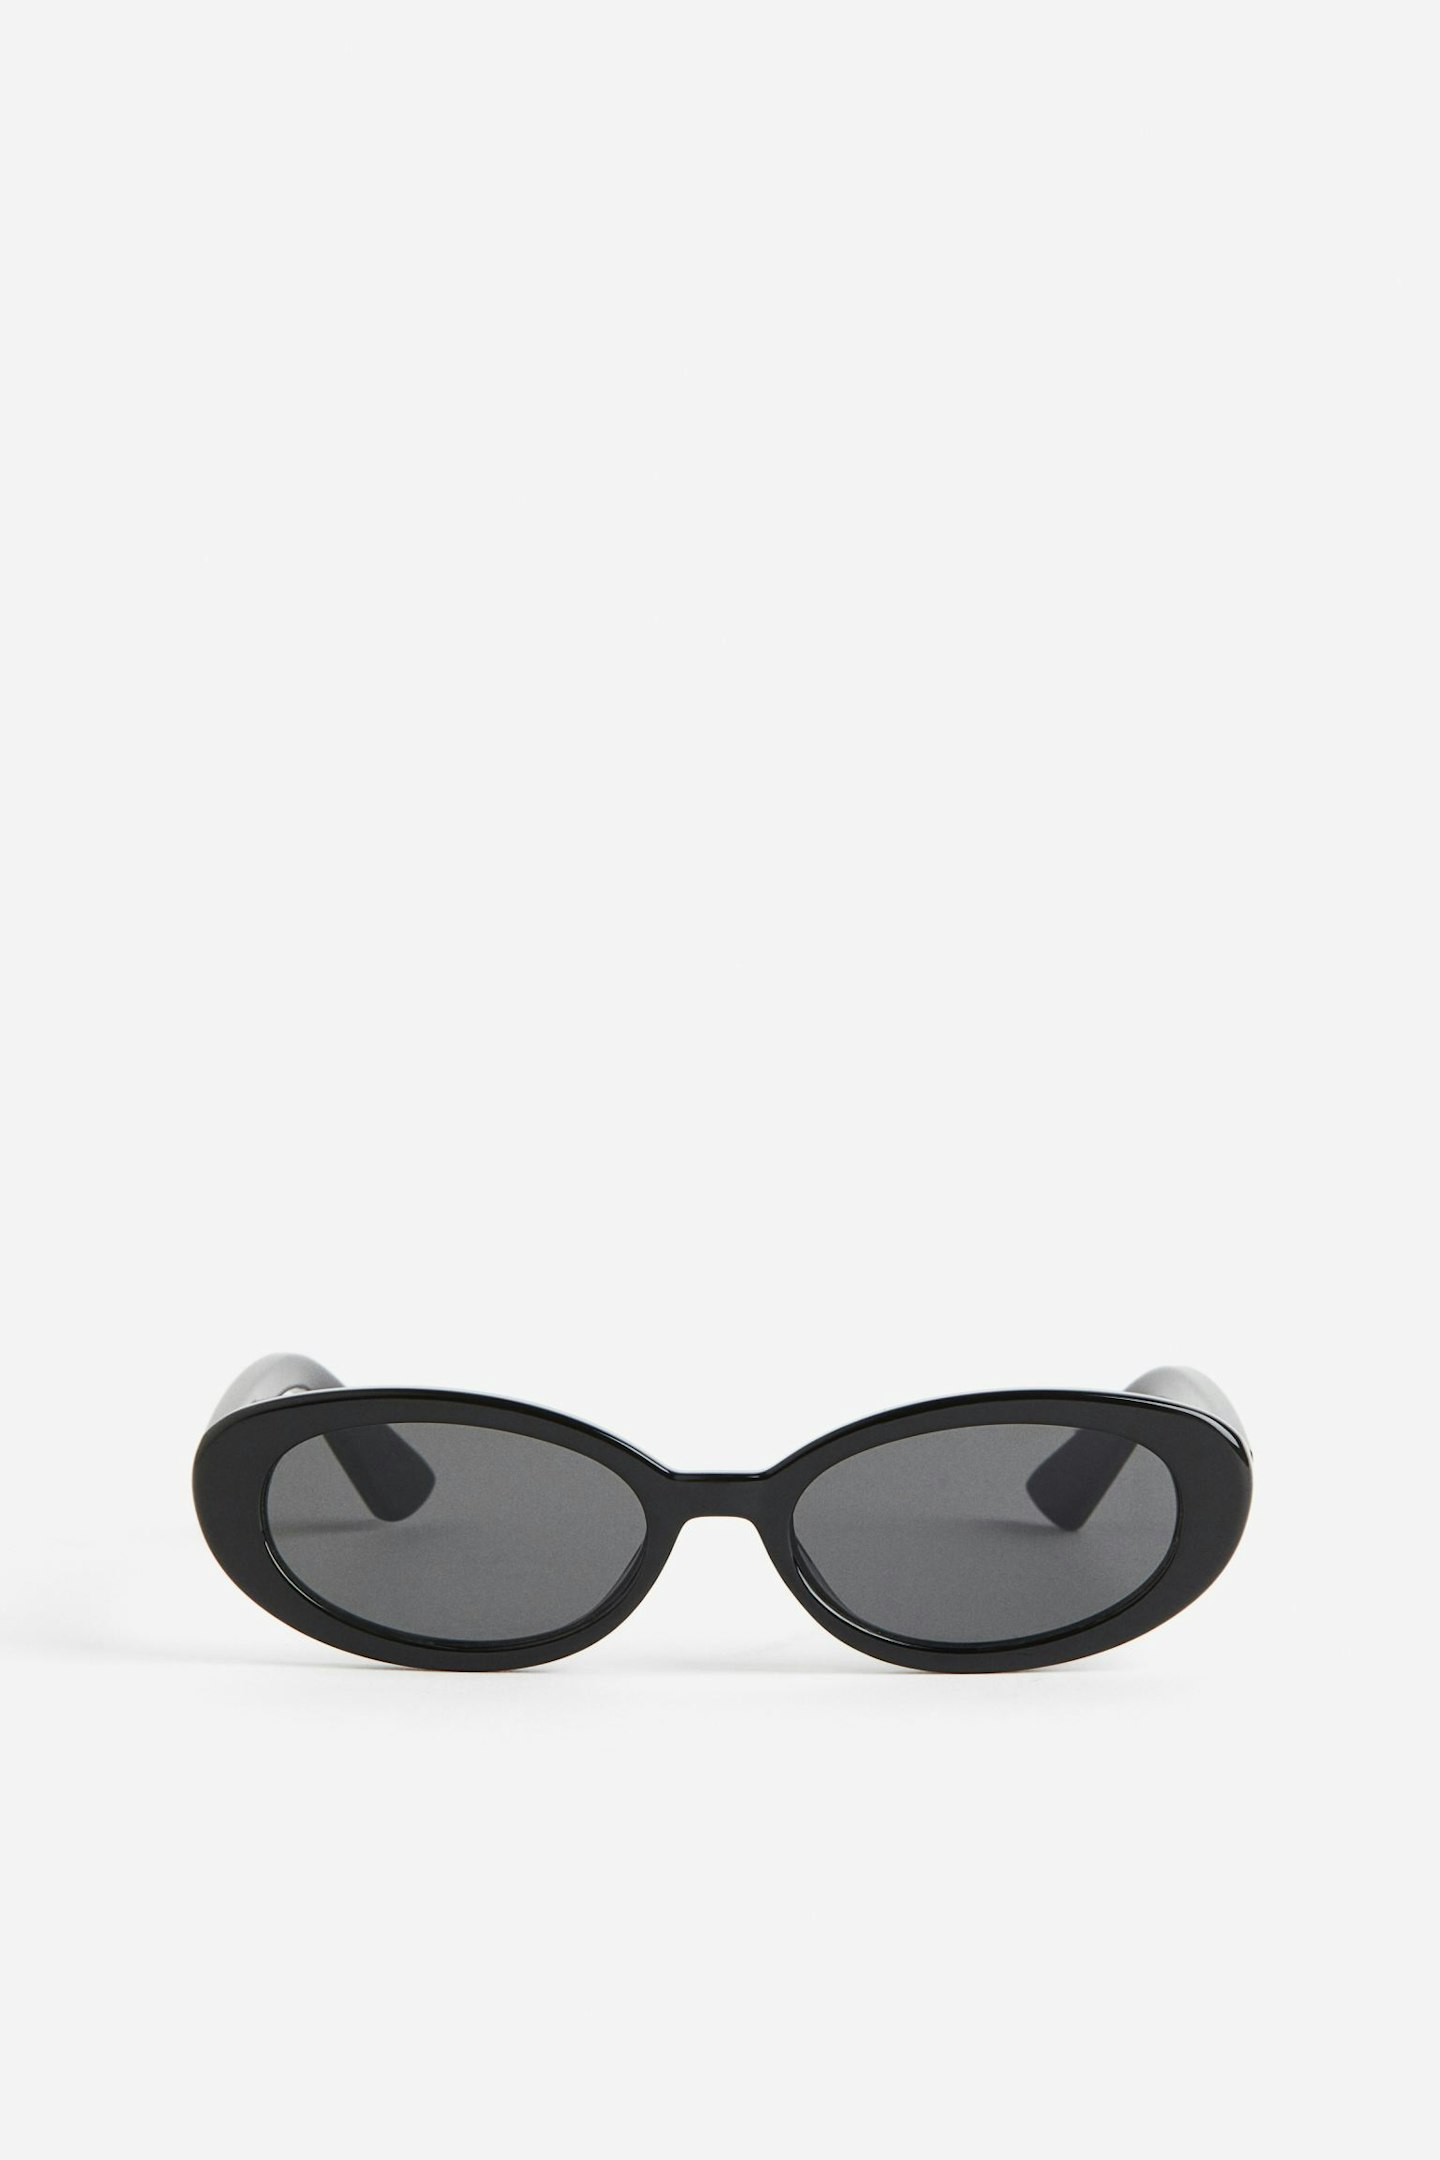 H&M oval sunglasses